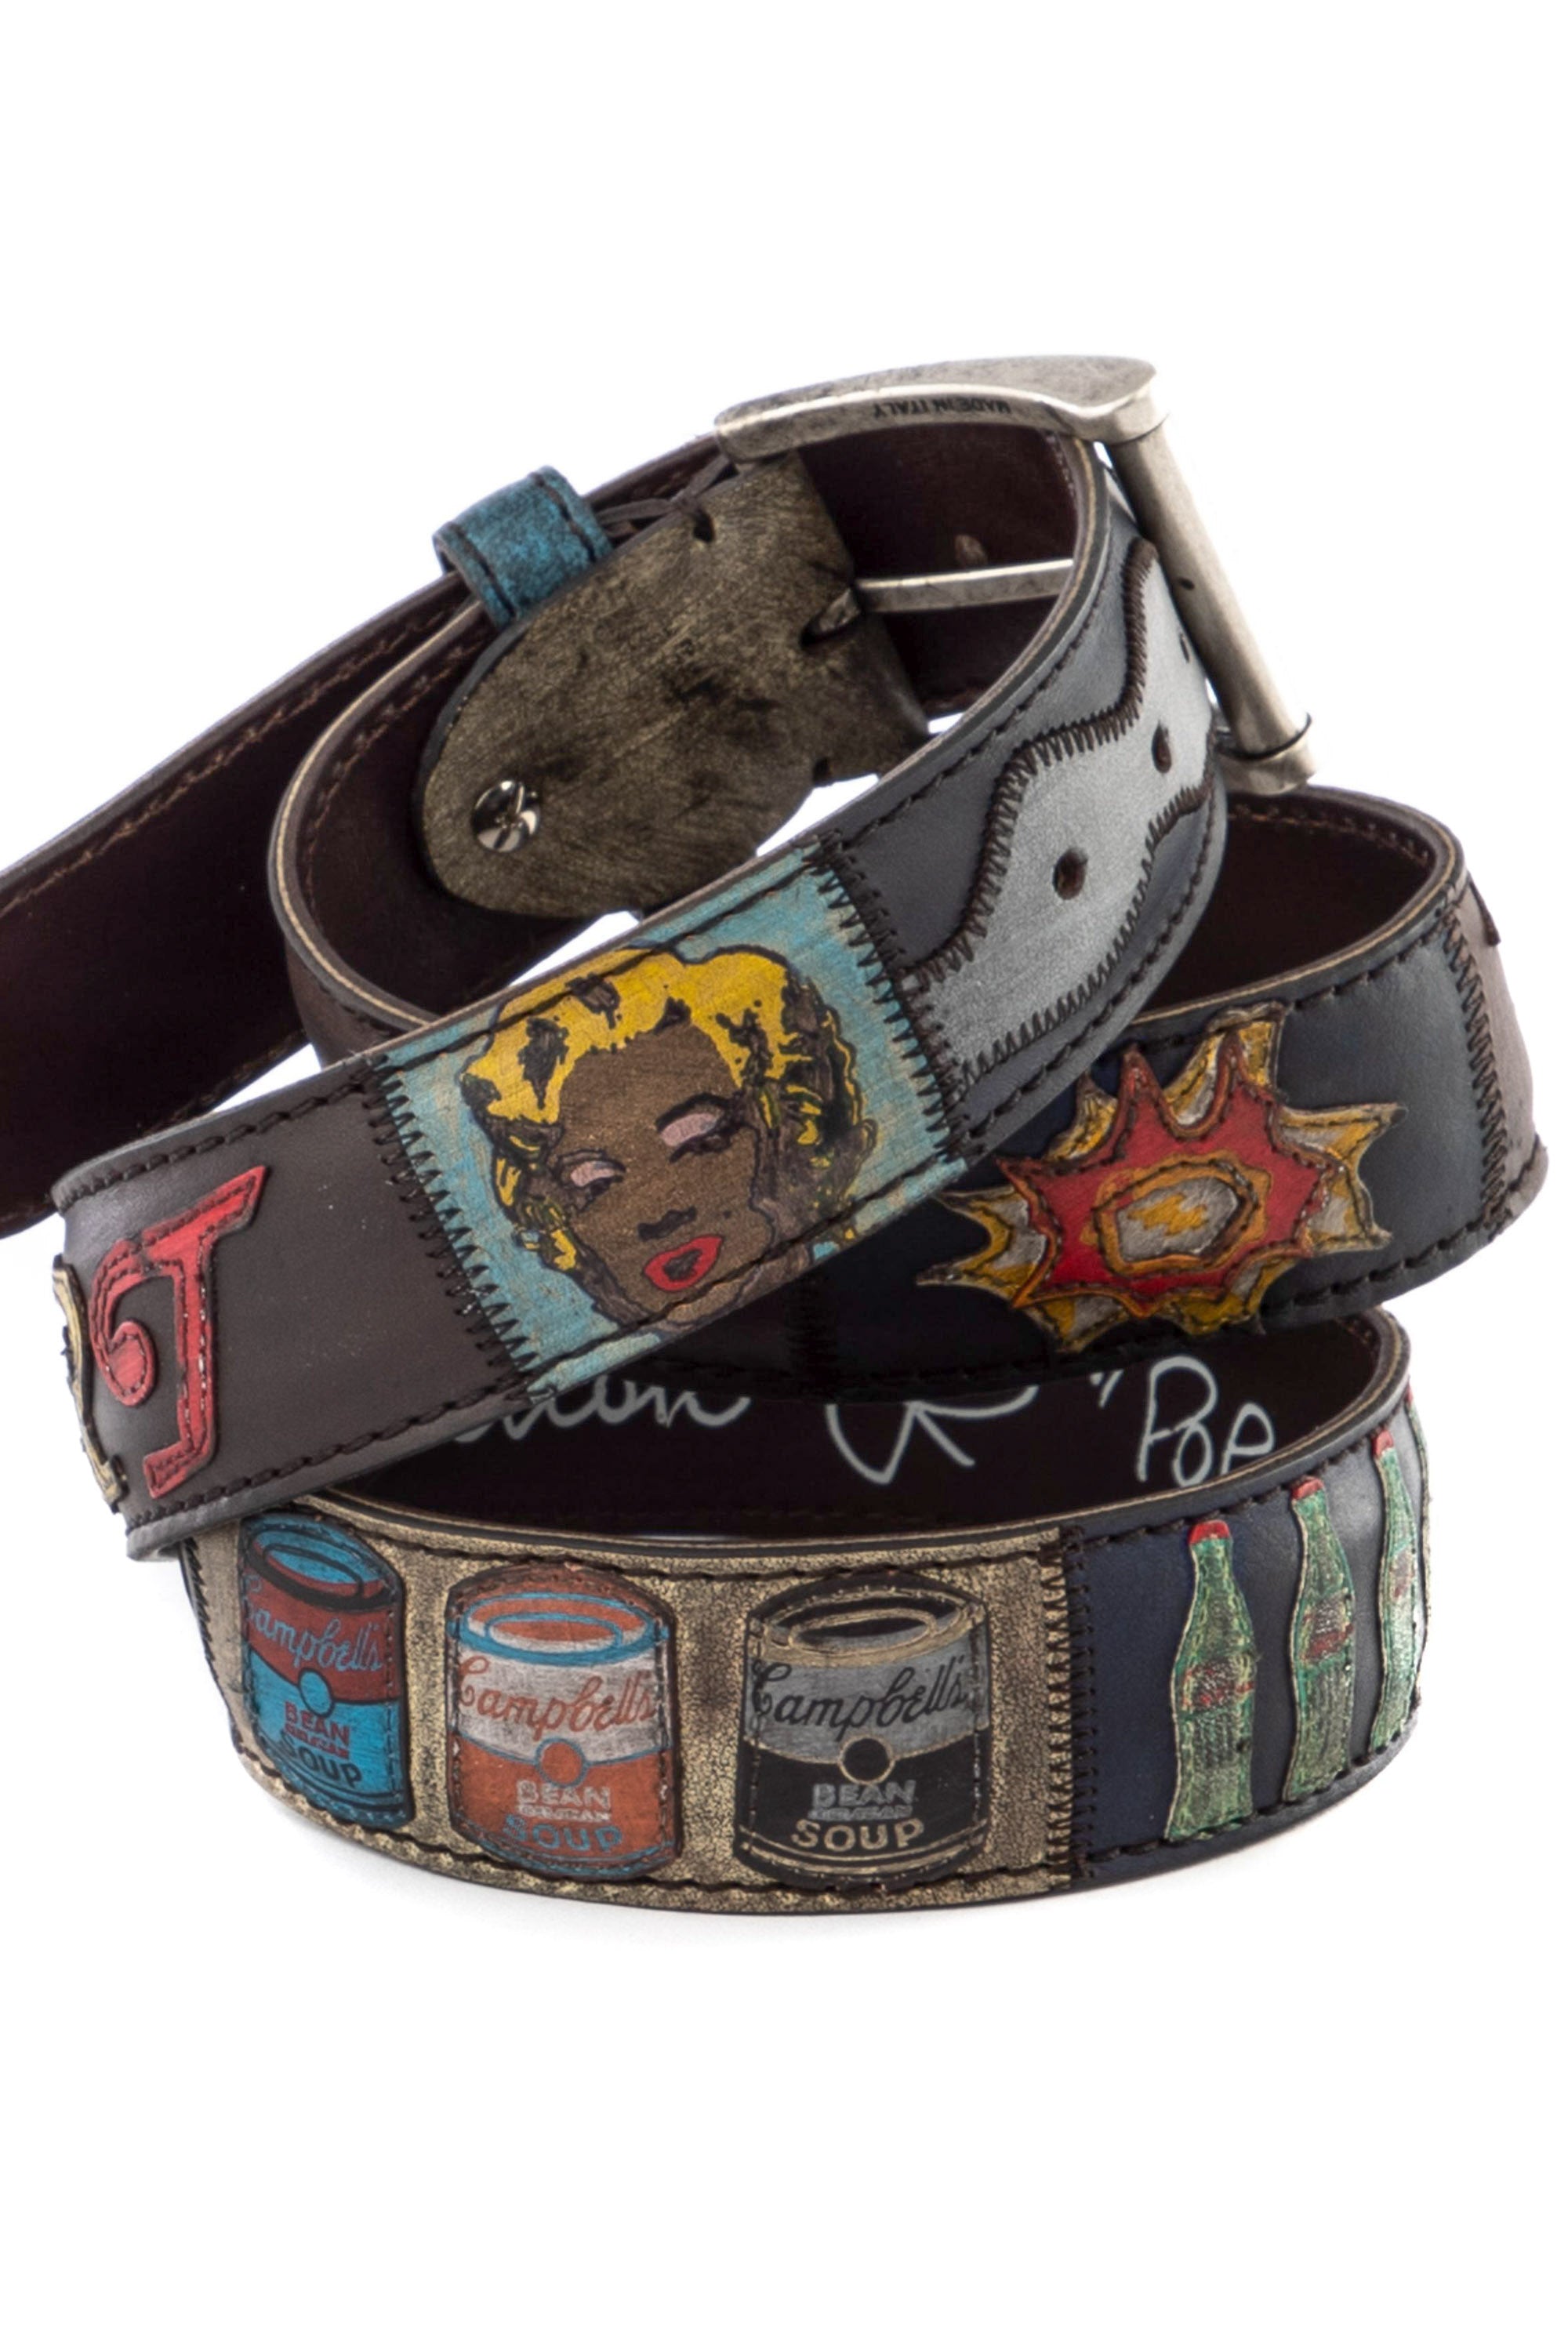 Handcrafted "pop art" leather belt